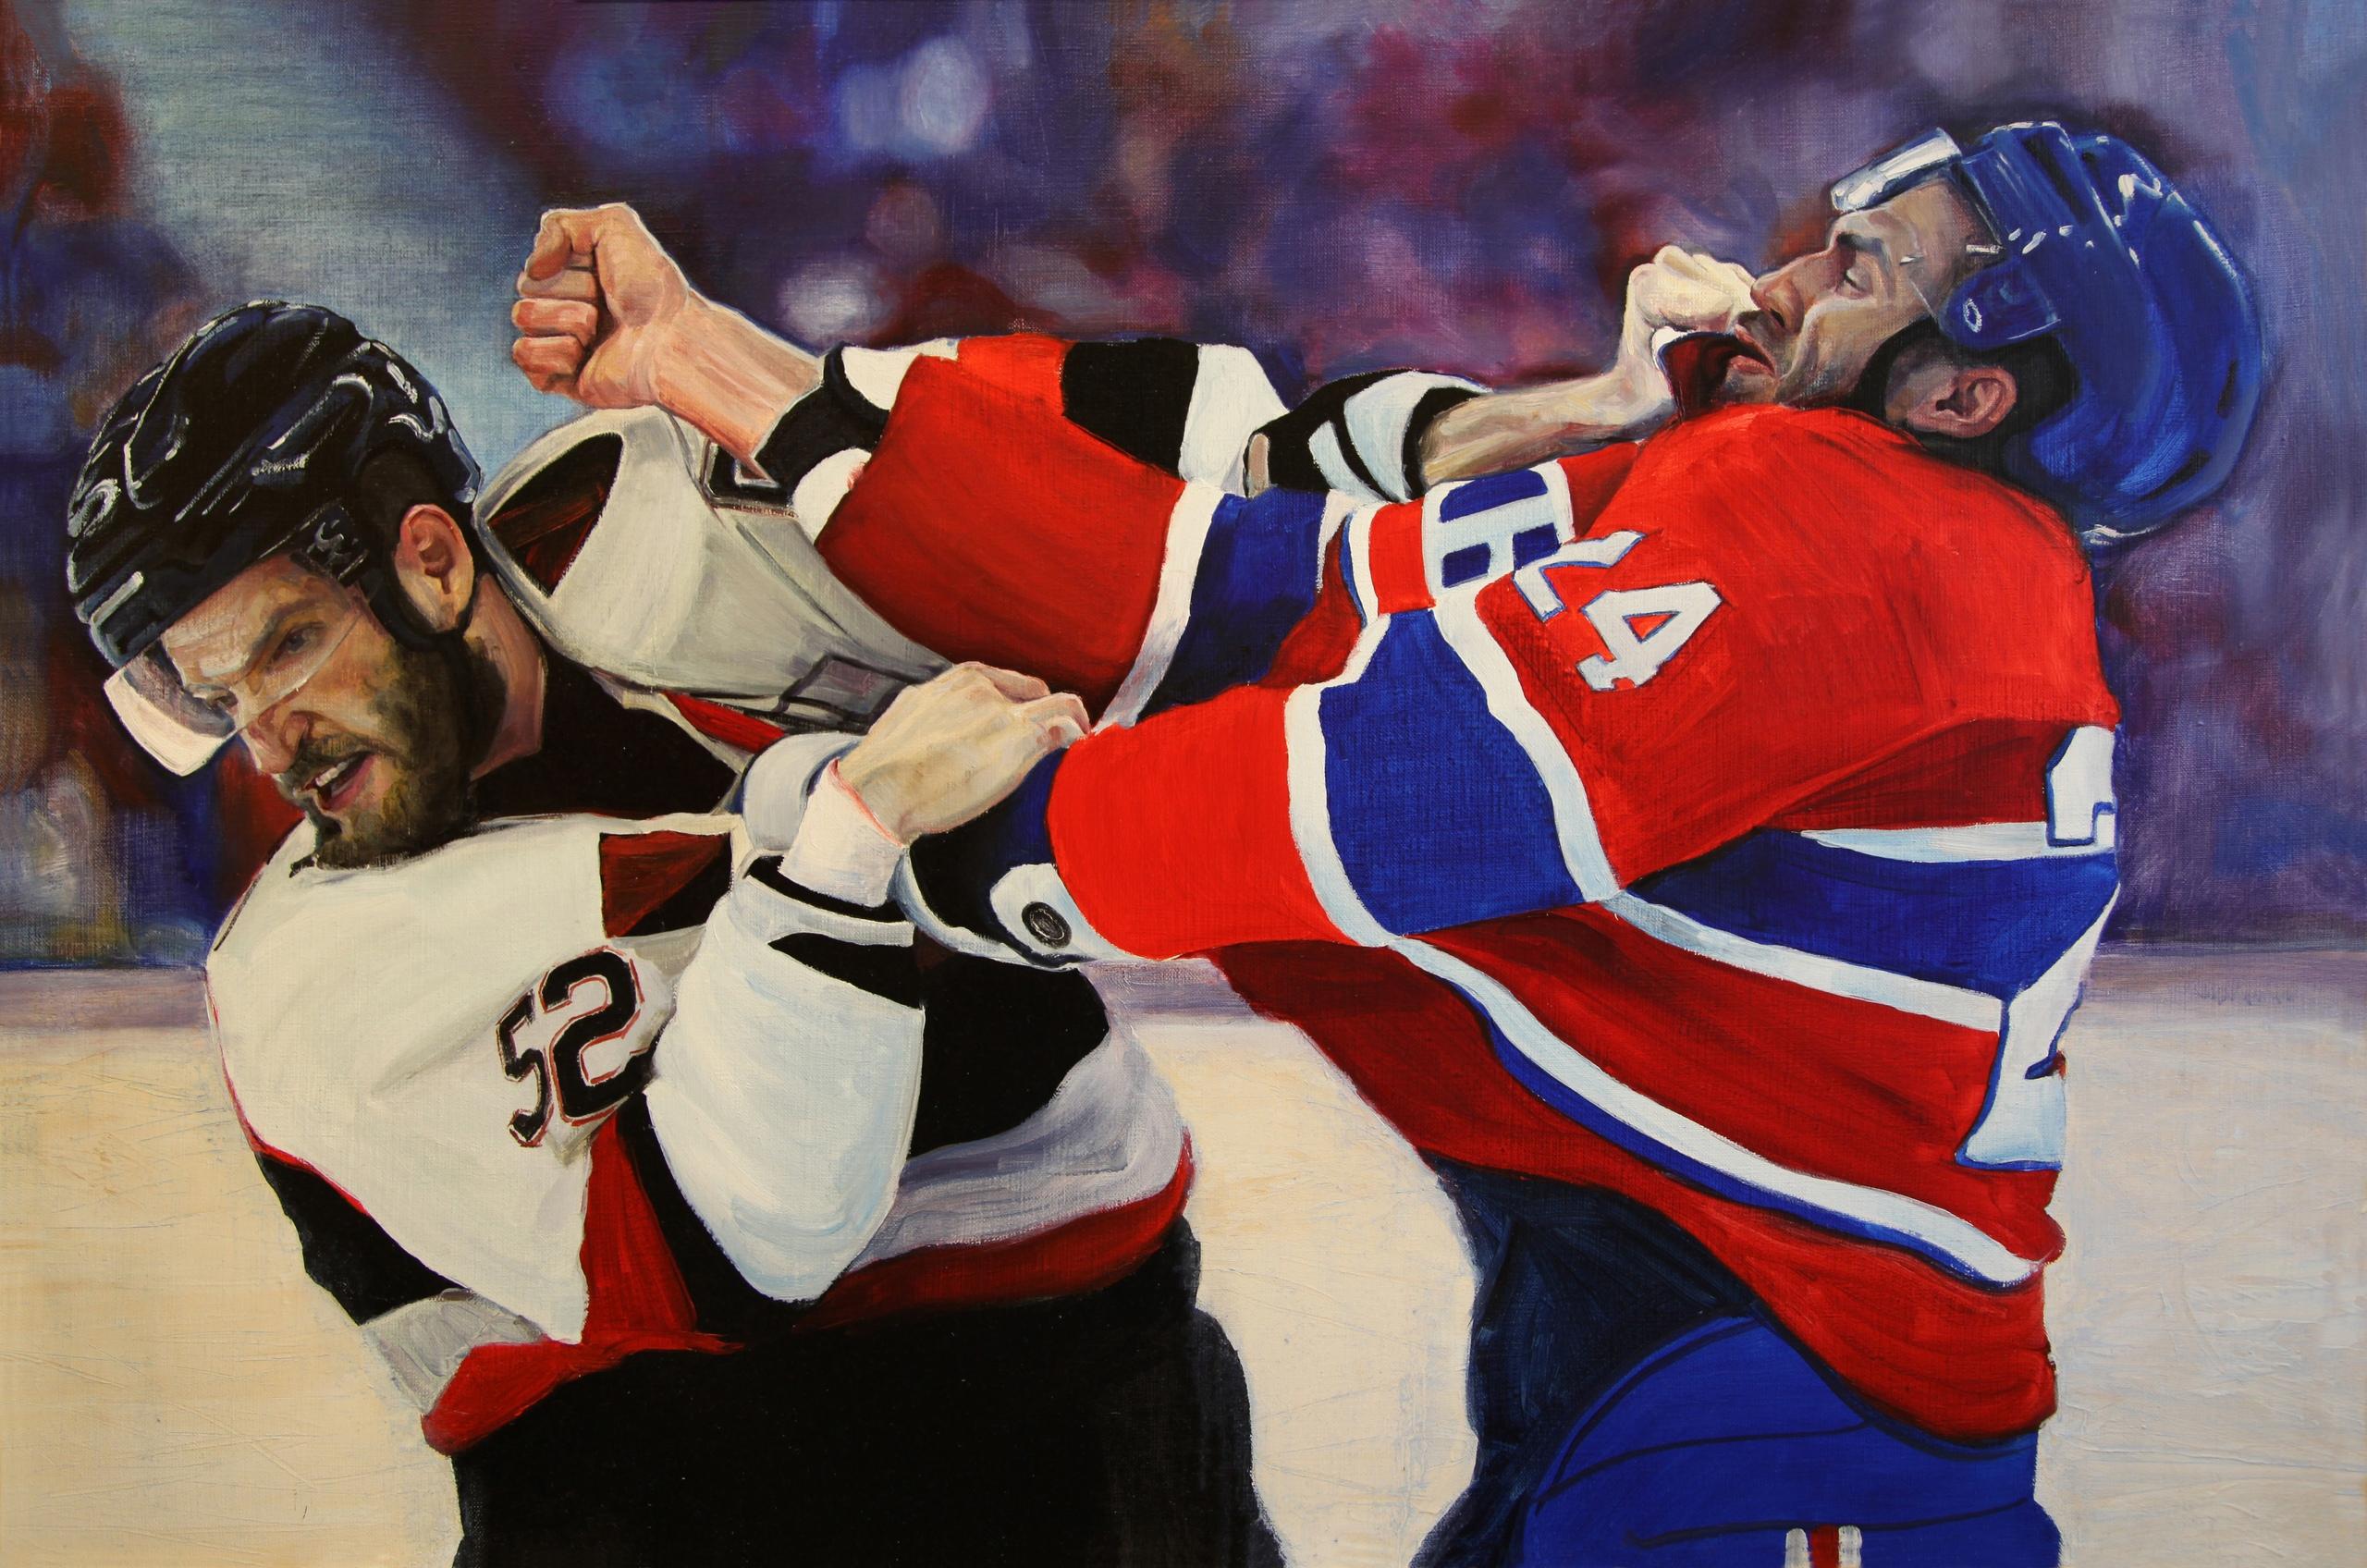 Fighting hockey players. 2019. Original modern art painting